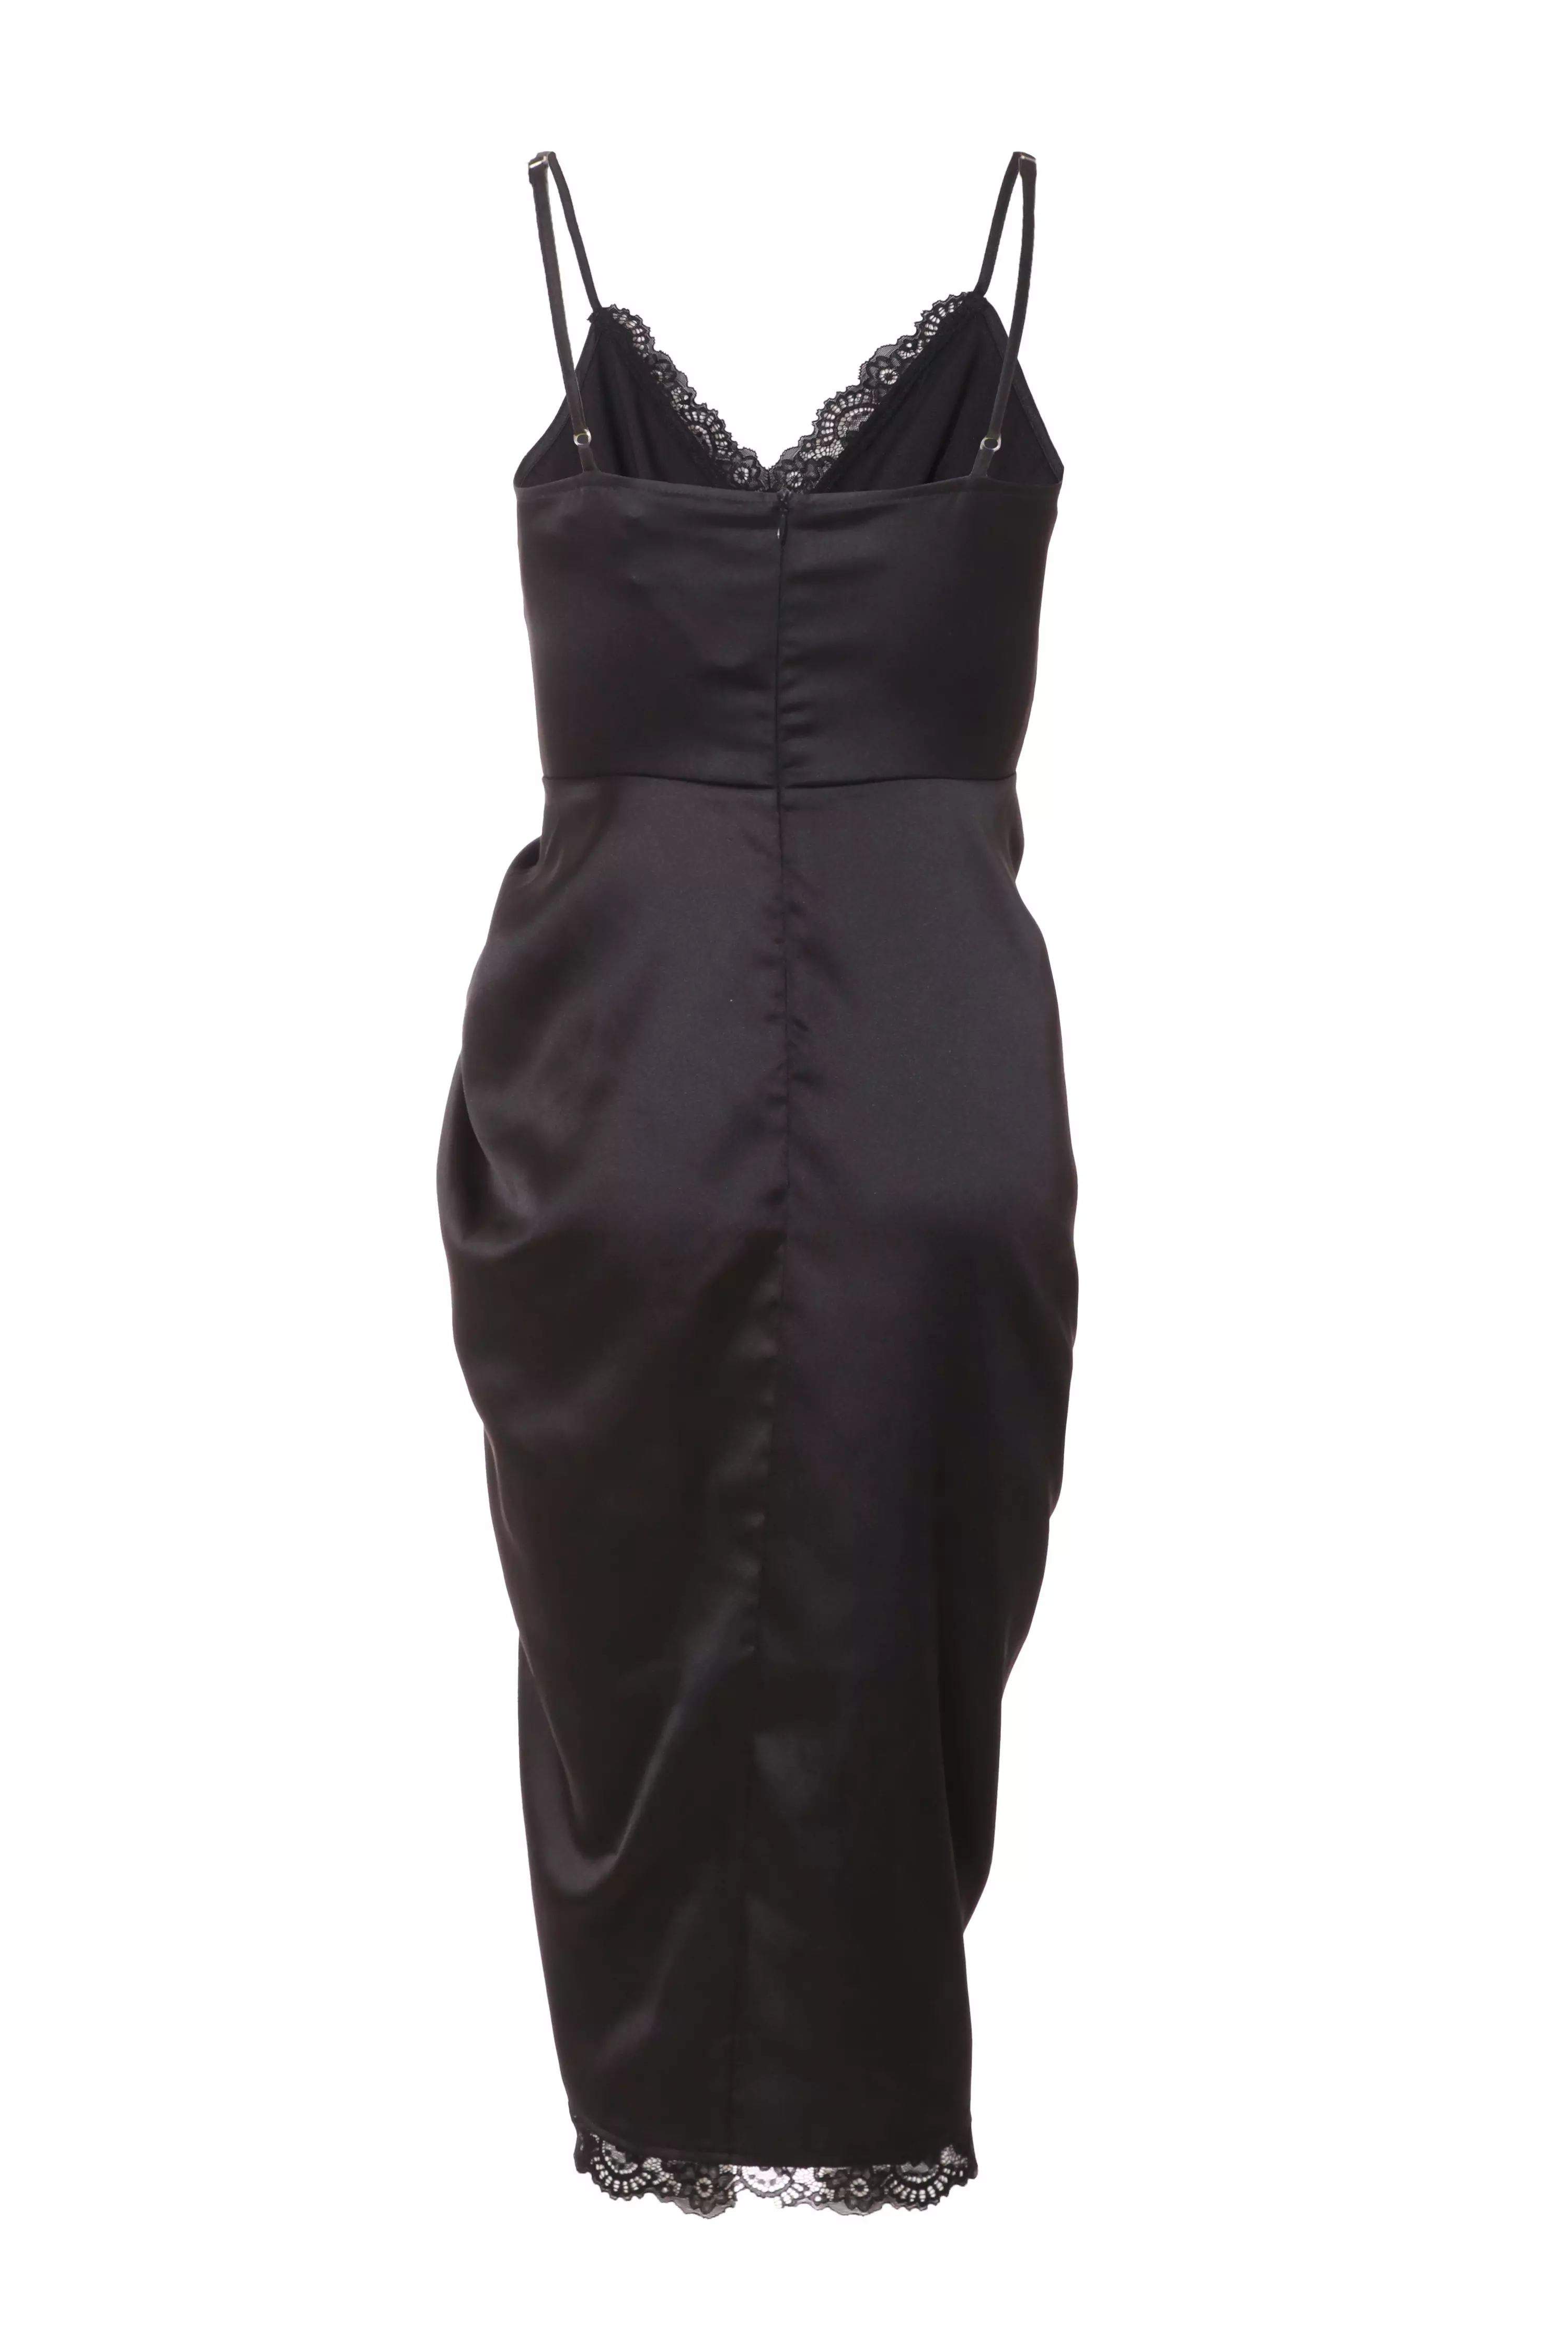 Petite Black Satin Lace Trim Midi Dress - QUIZ Clothing